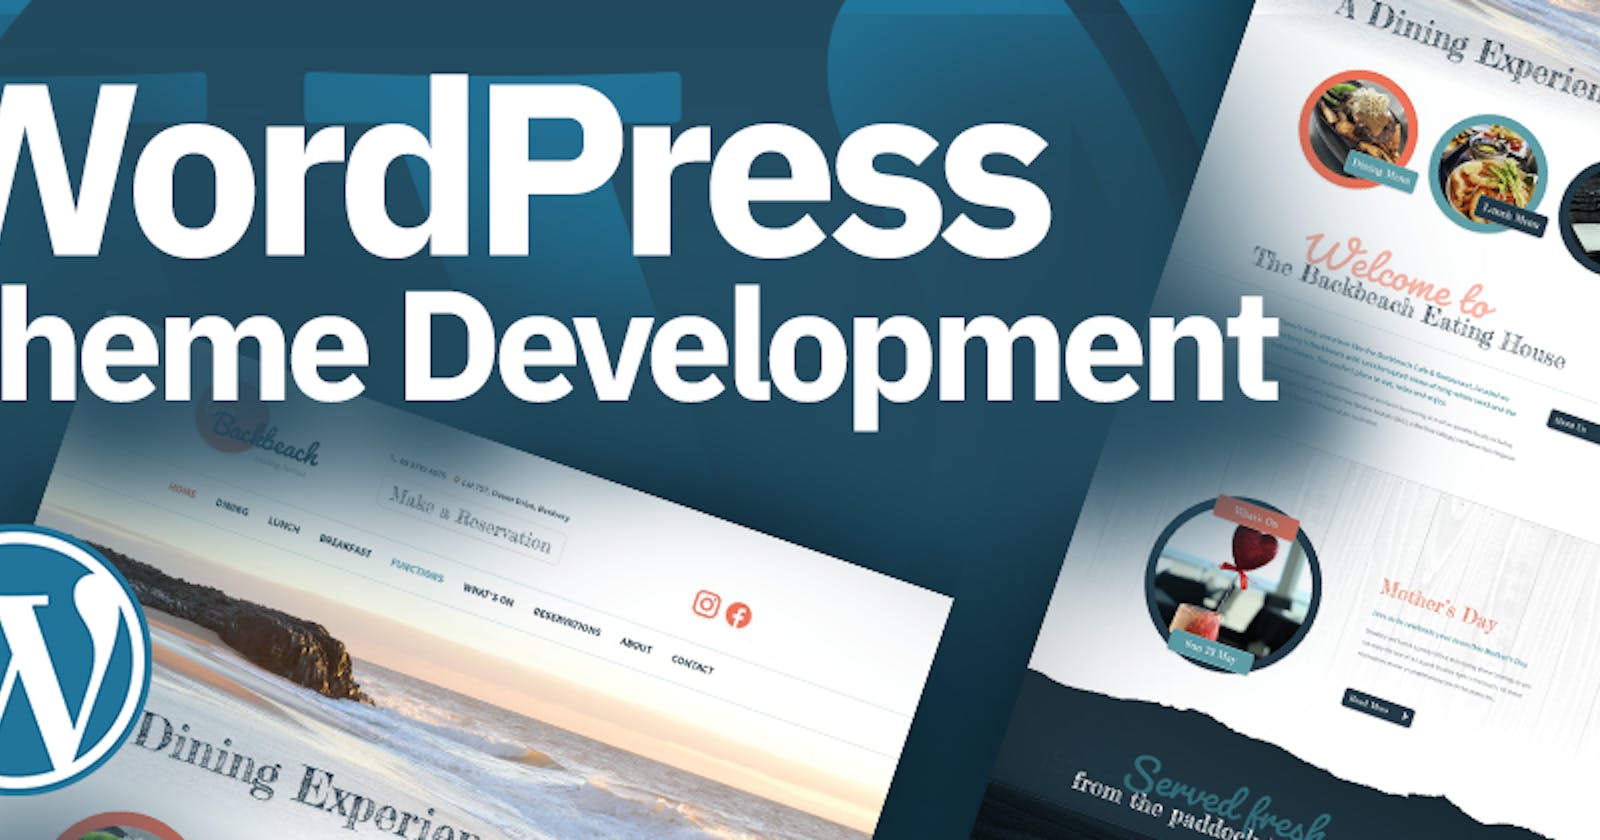 WordPress Theme Development Tutorial 2020